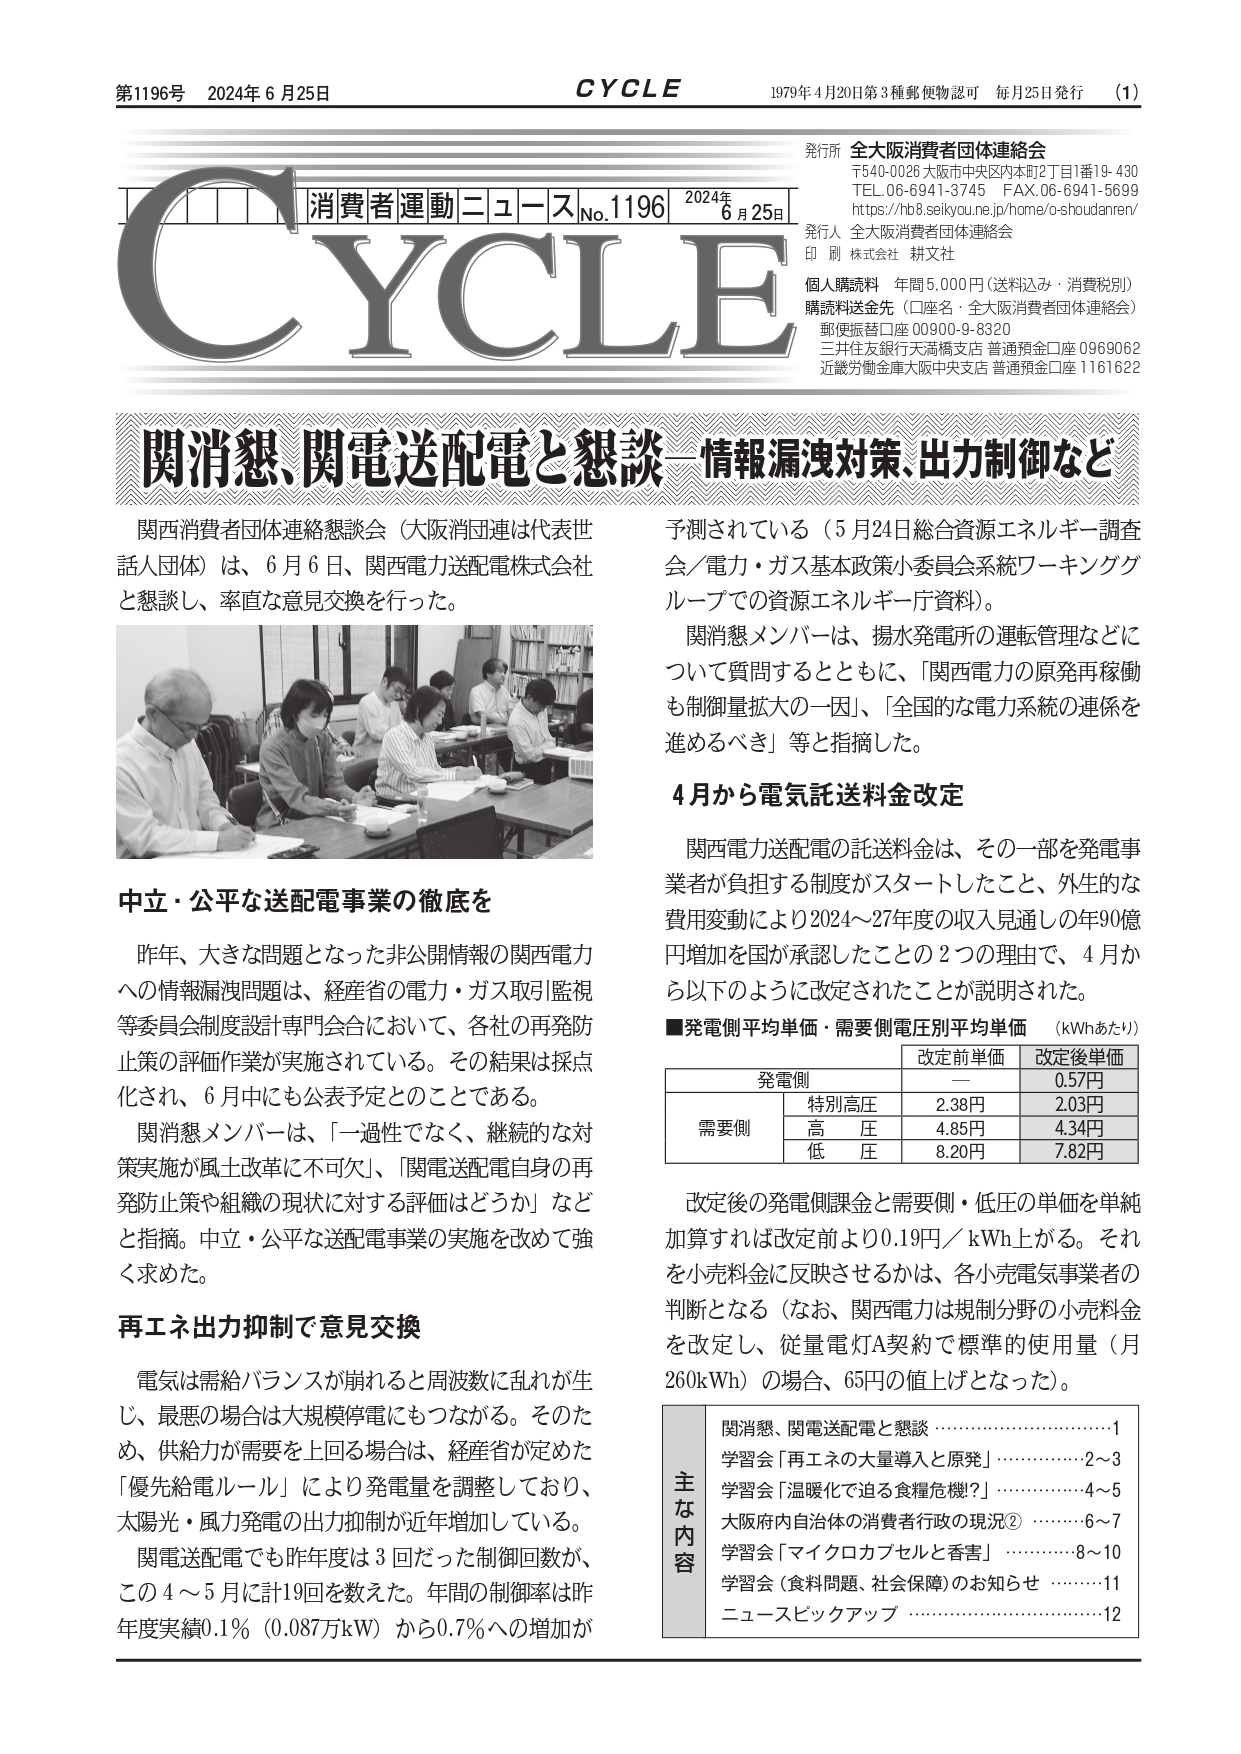 機関紙CYCLE（6/25）